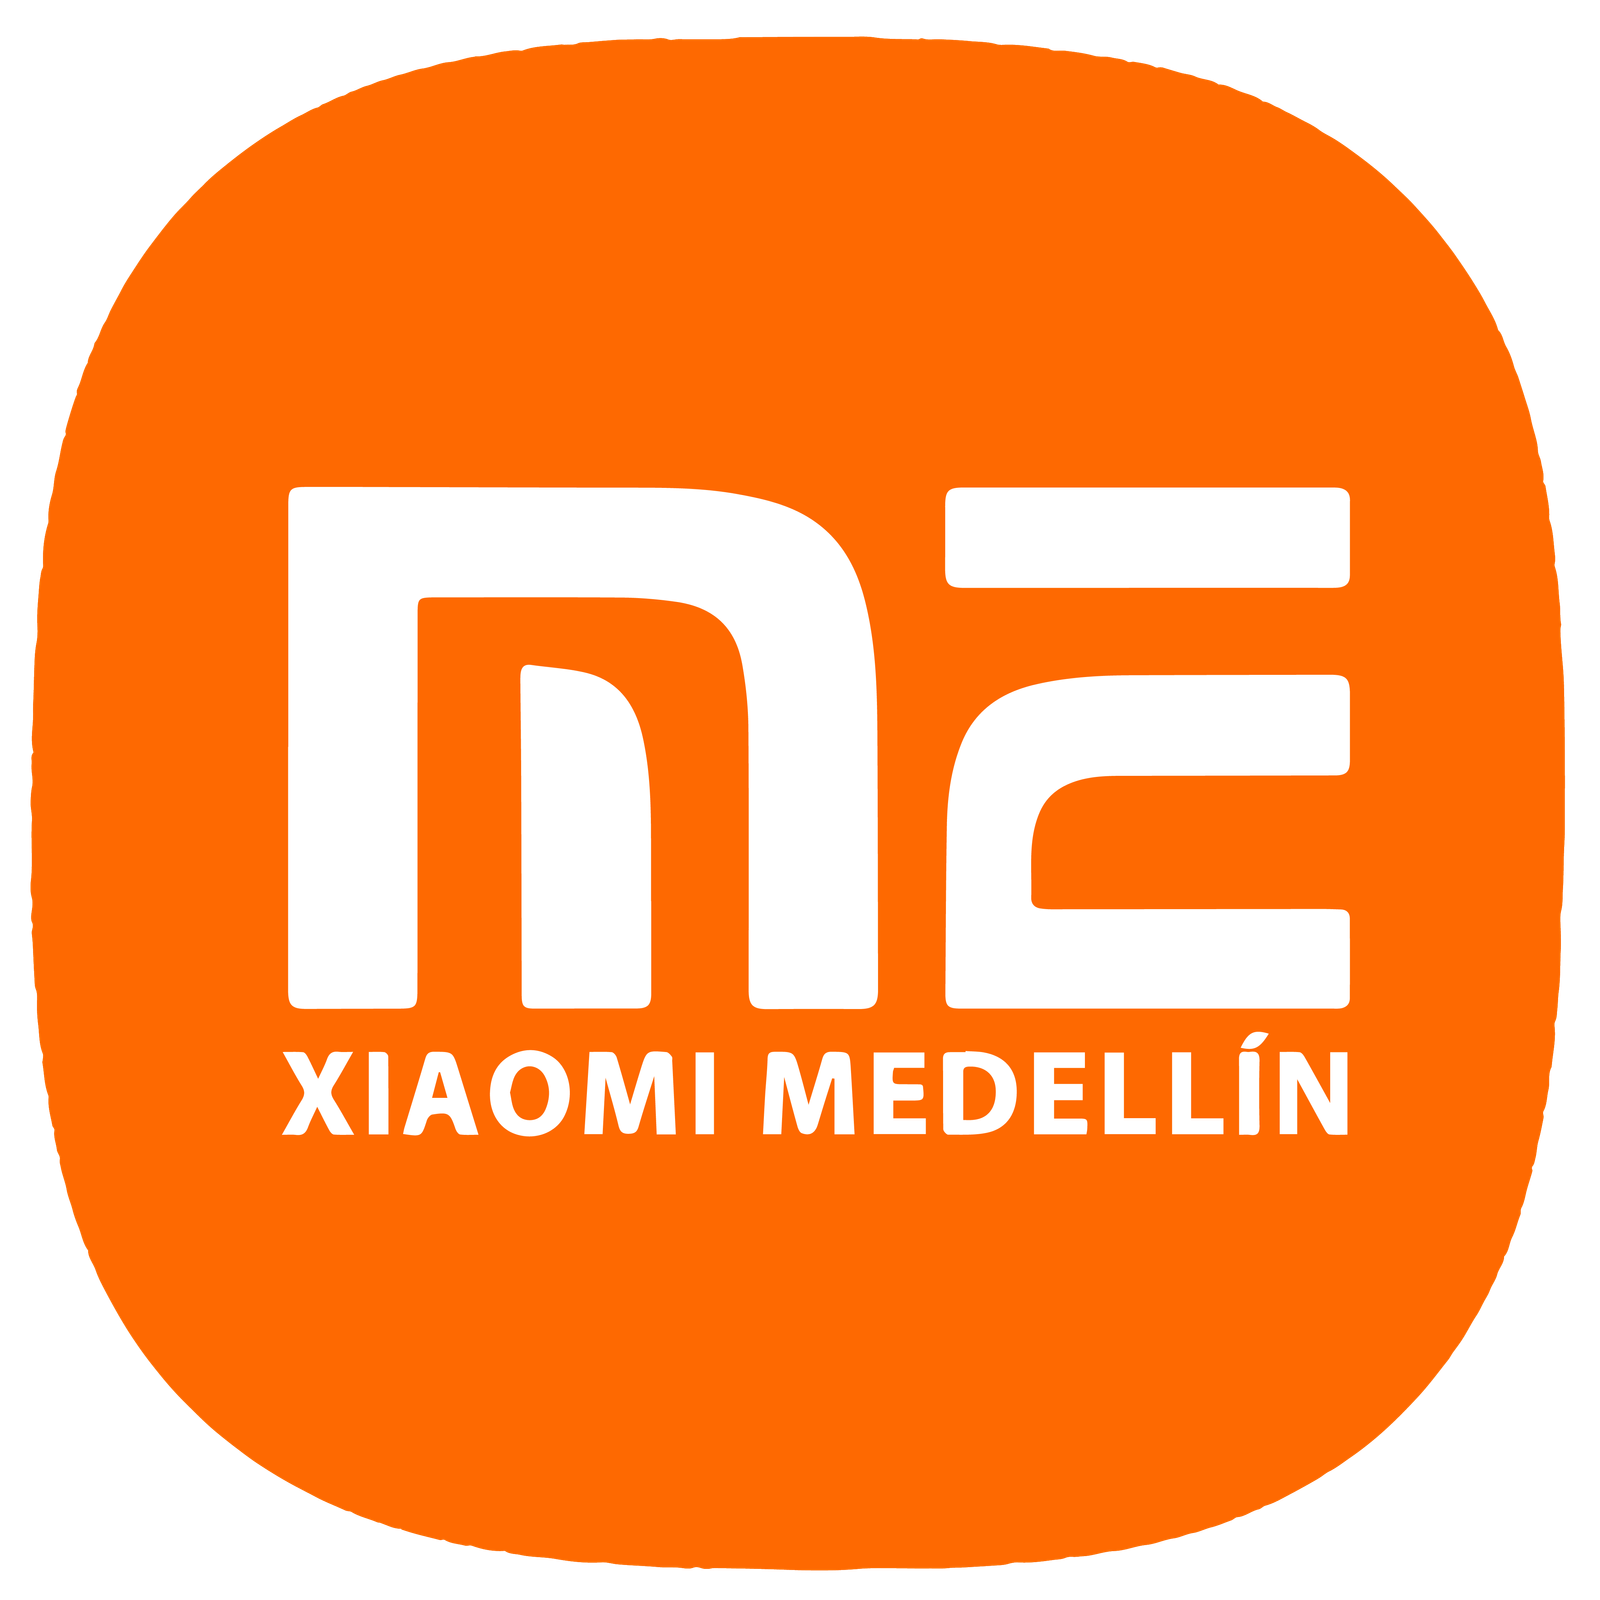 Xiaomi Medellin